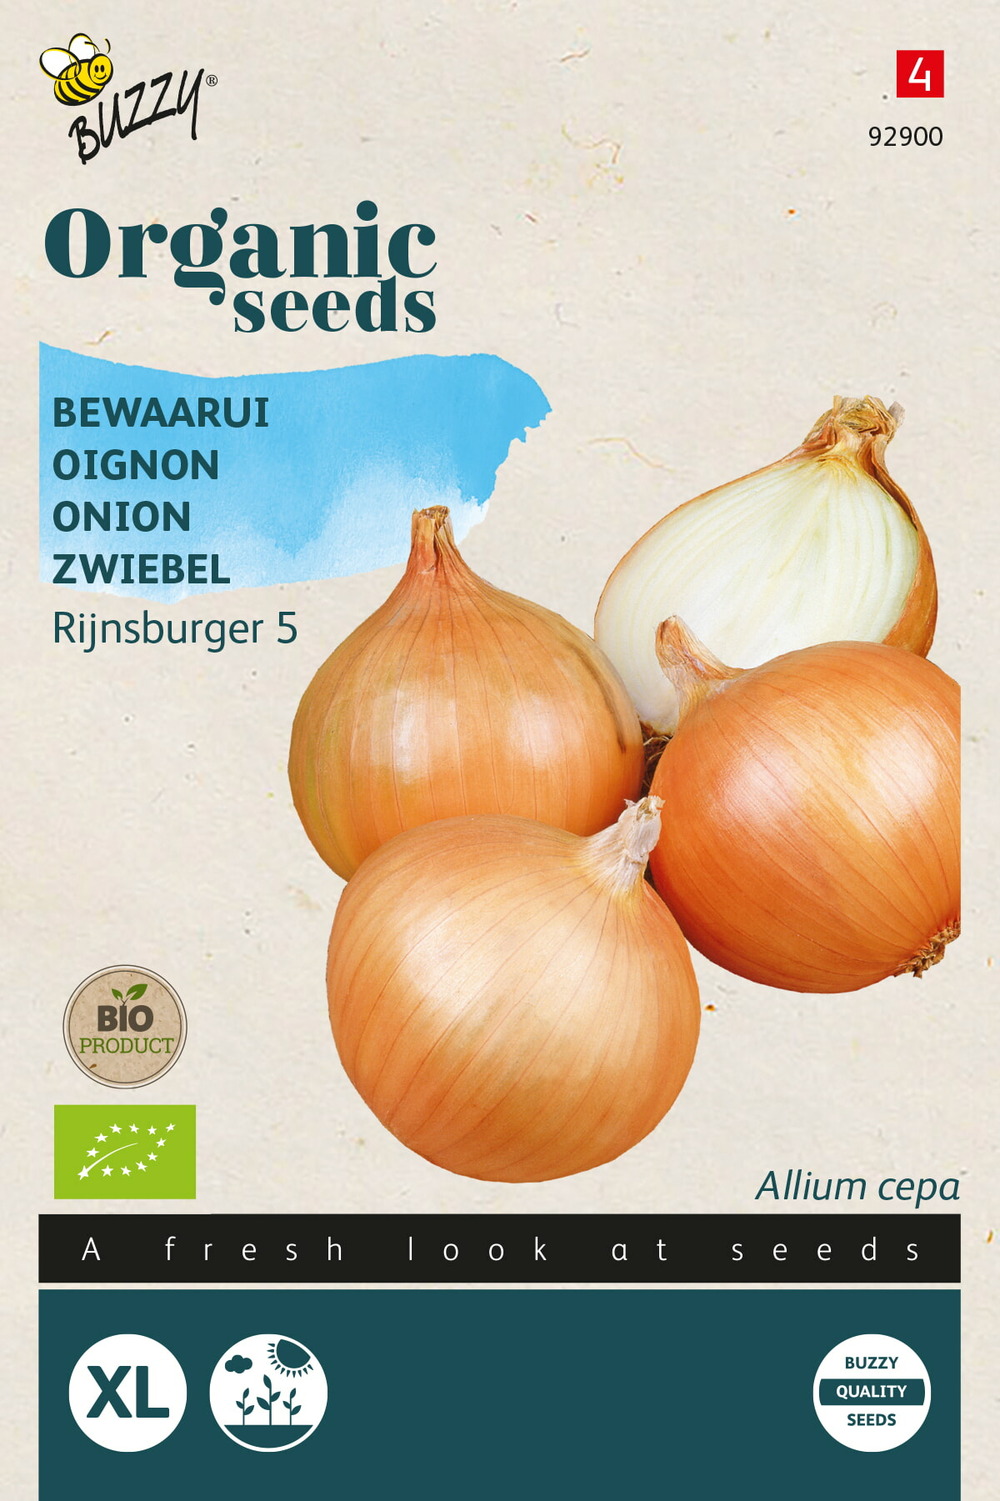 Buzzy organic oignon rijnsburger 5 (bio) - ca. 1 gr